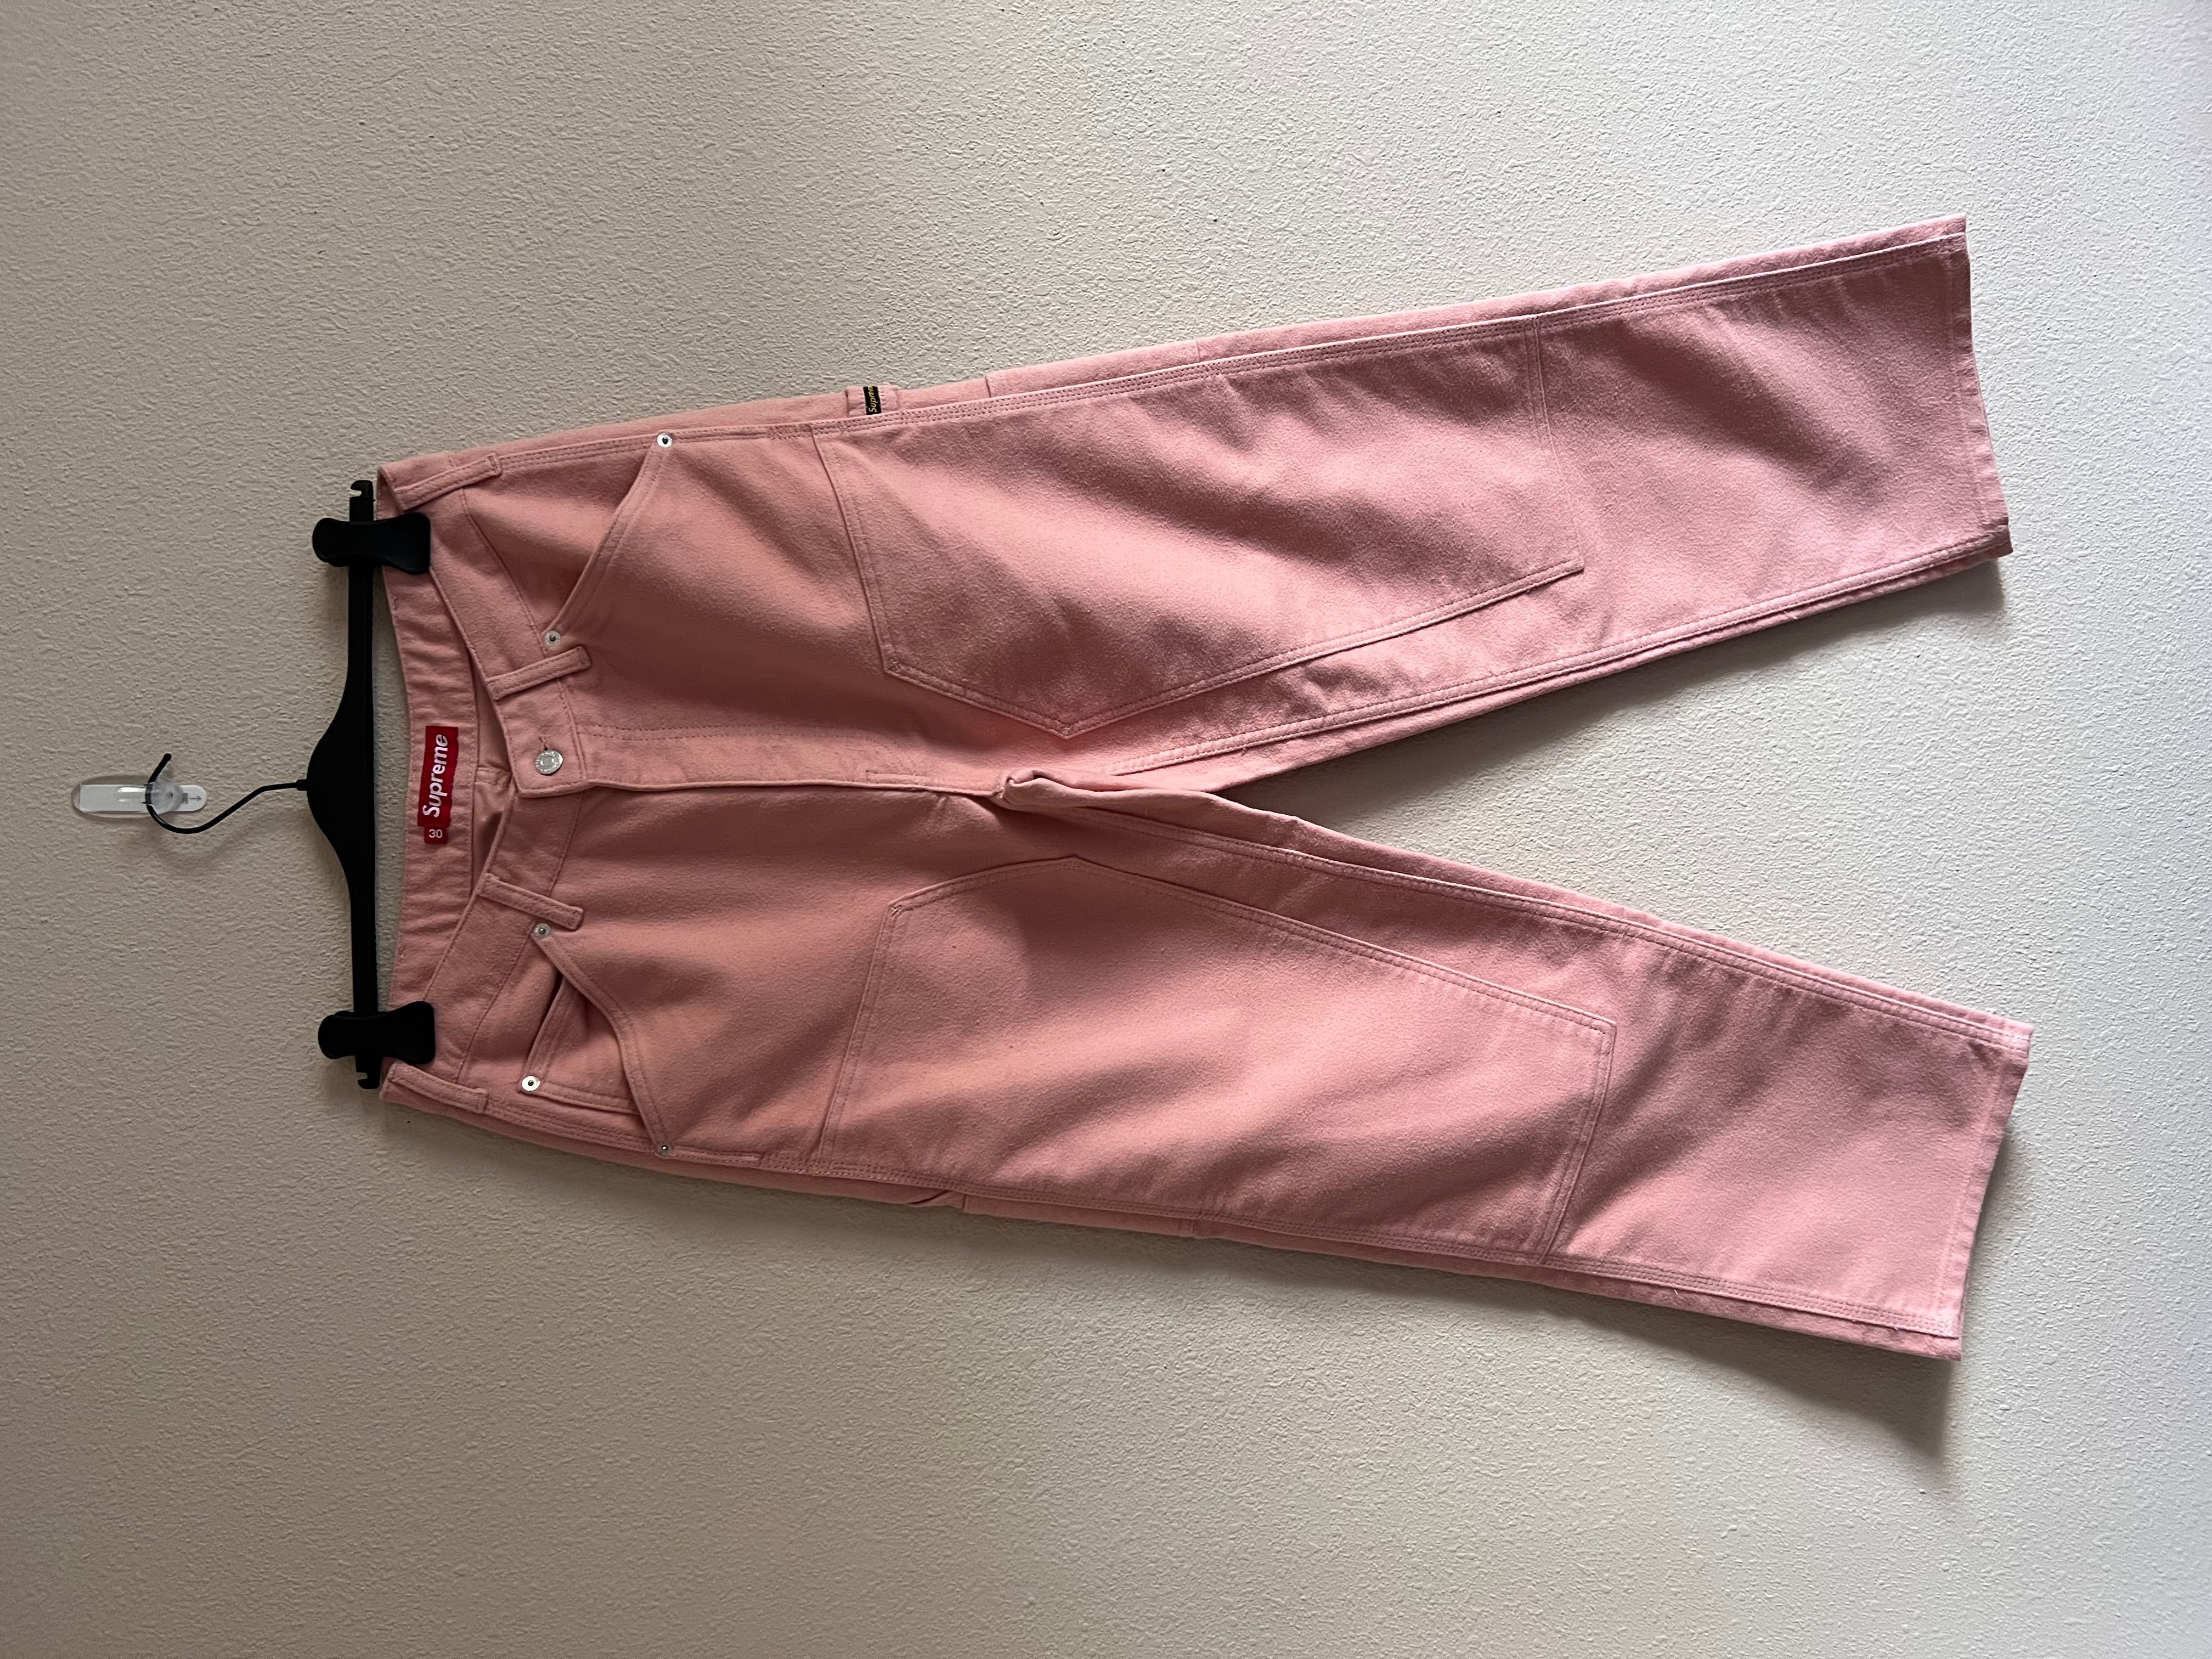 Supreme Moleskin Work Jacket Dusty Pink-